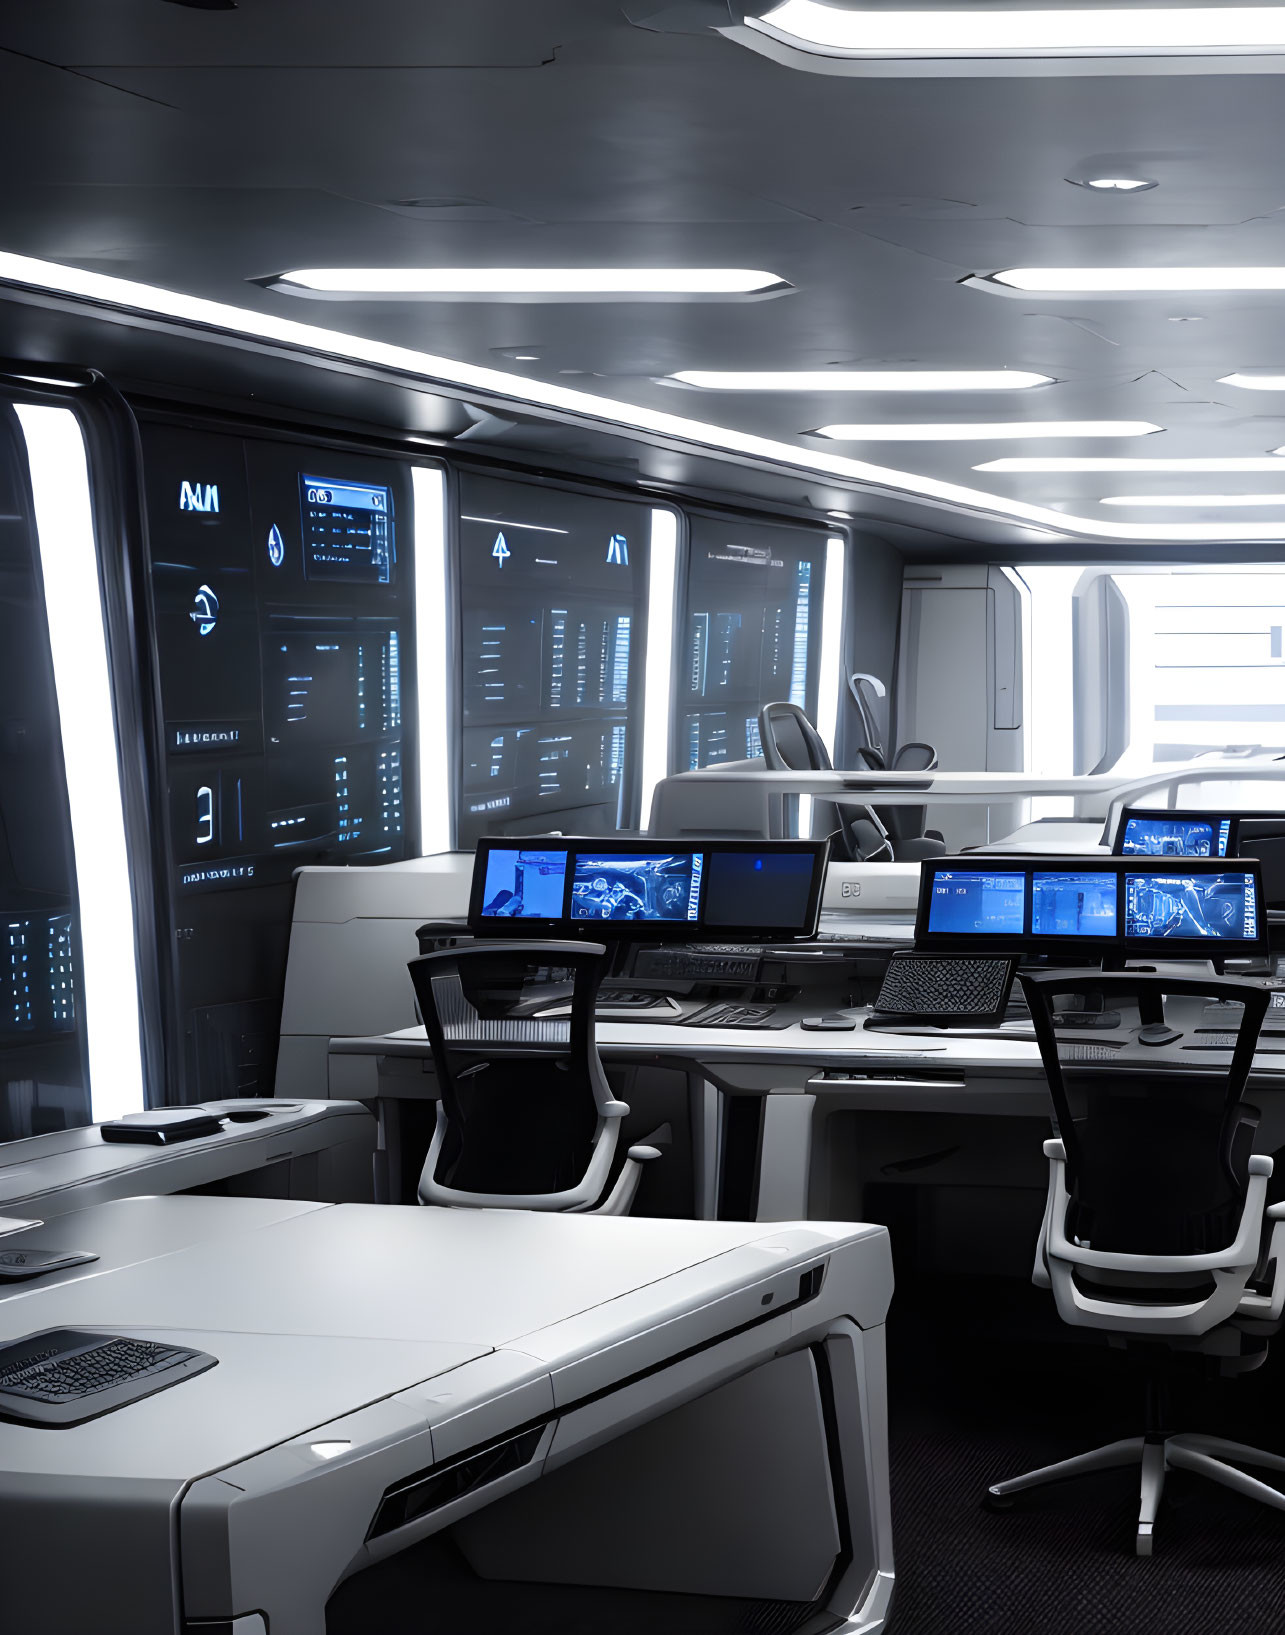 Futuristic spaceship bridge with high-tech control panels and screens